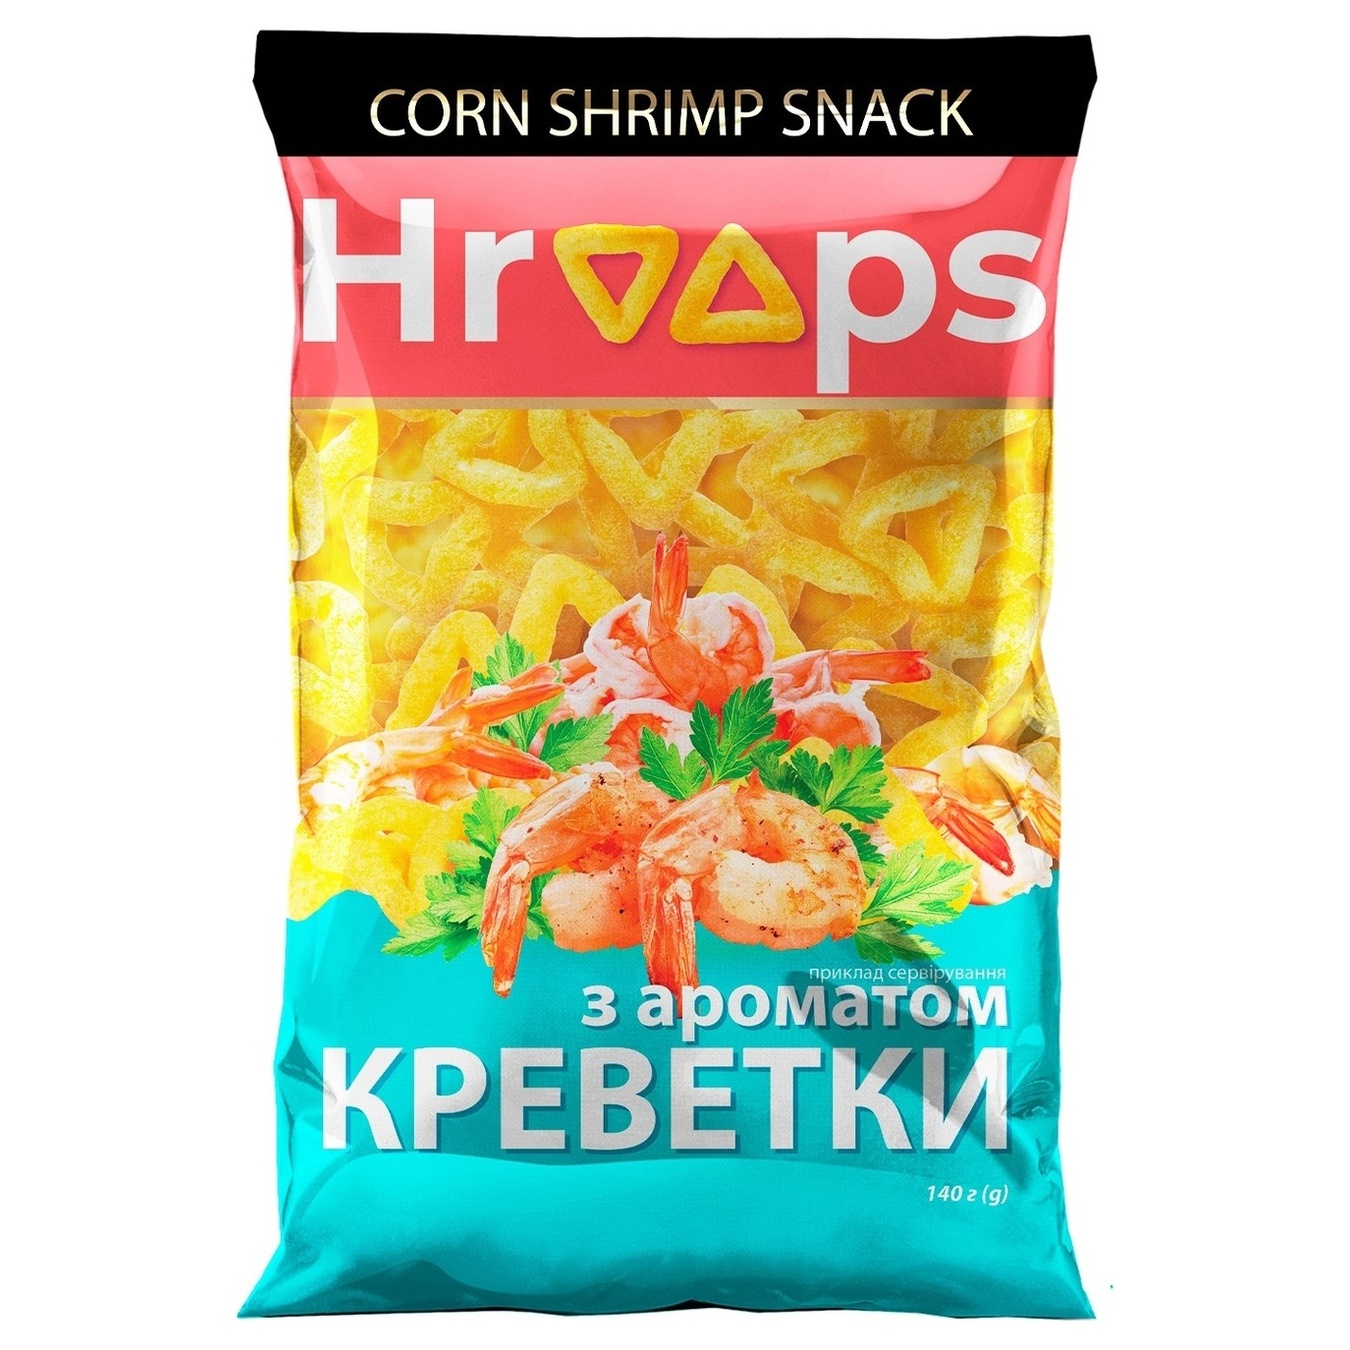 Hroops corn snacks with shrimp flavor 140g